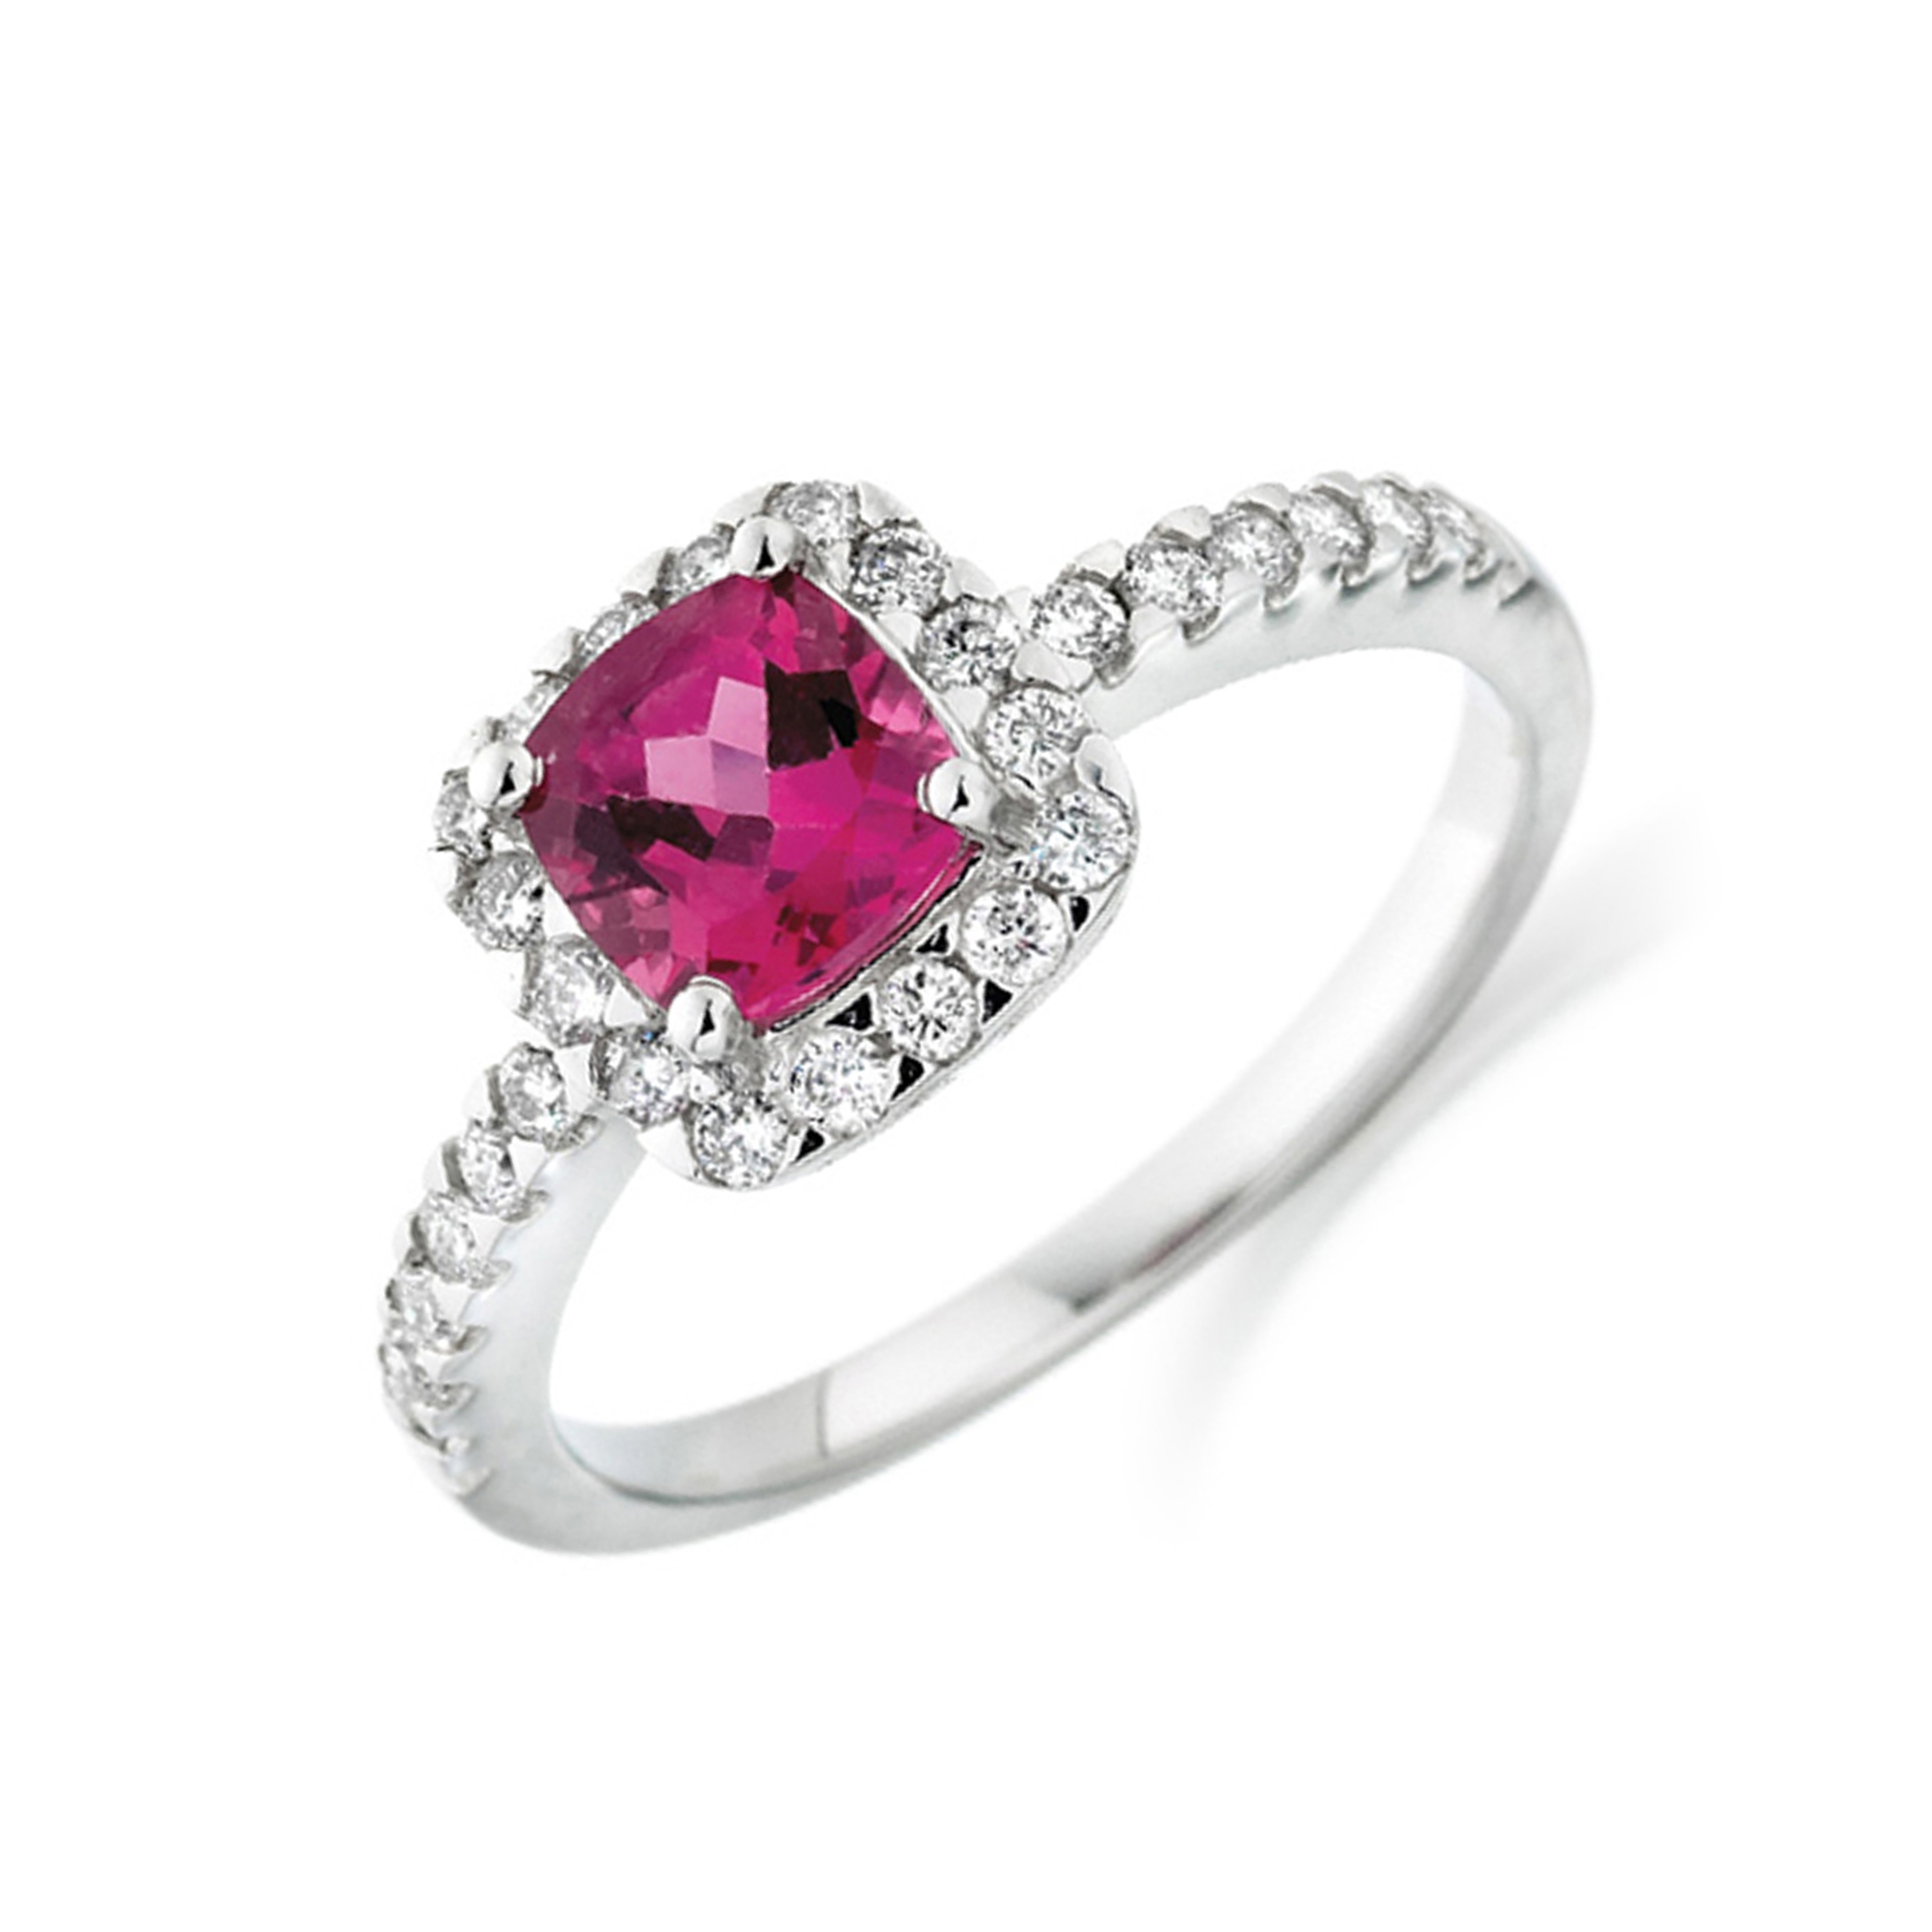 4X4mm Cushion Sqare Pink Tourmaline Stones On Shoulder Diamond And Gemstone Engagement Ring